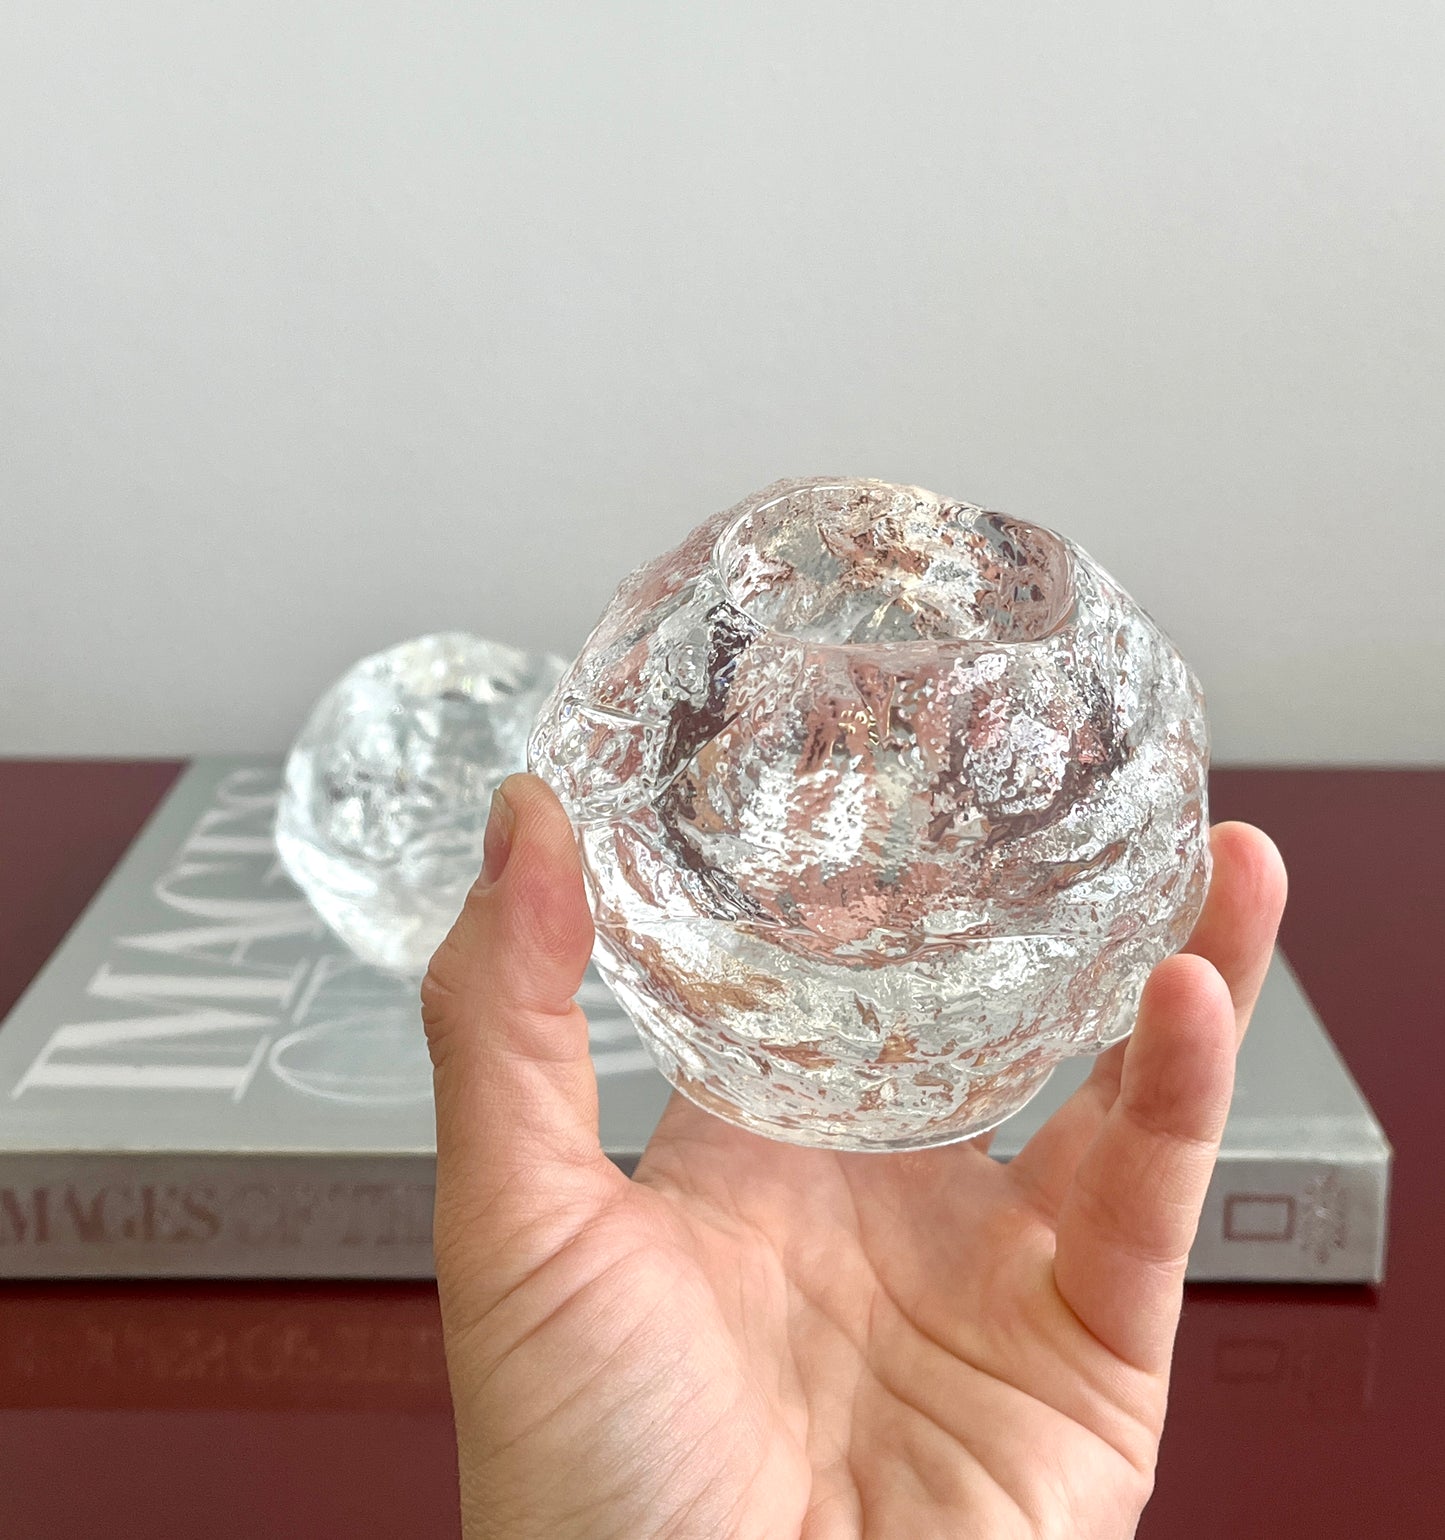 Kosta Boda Crystal “Snowball” Candle Holders